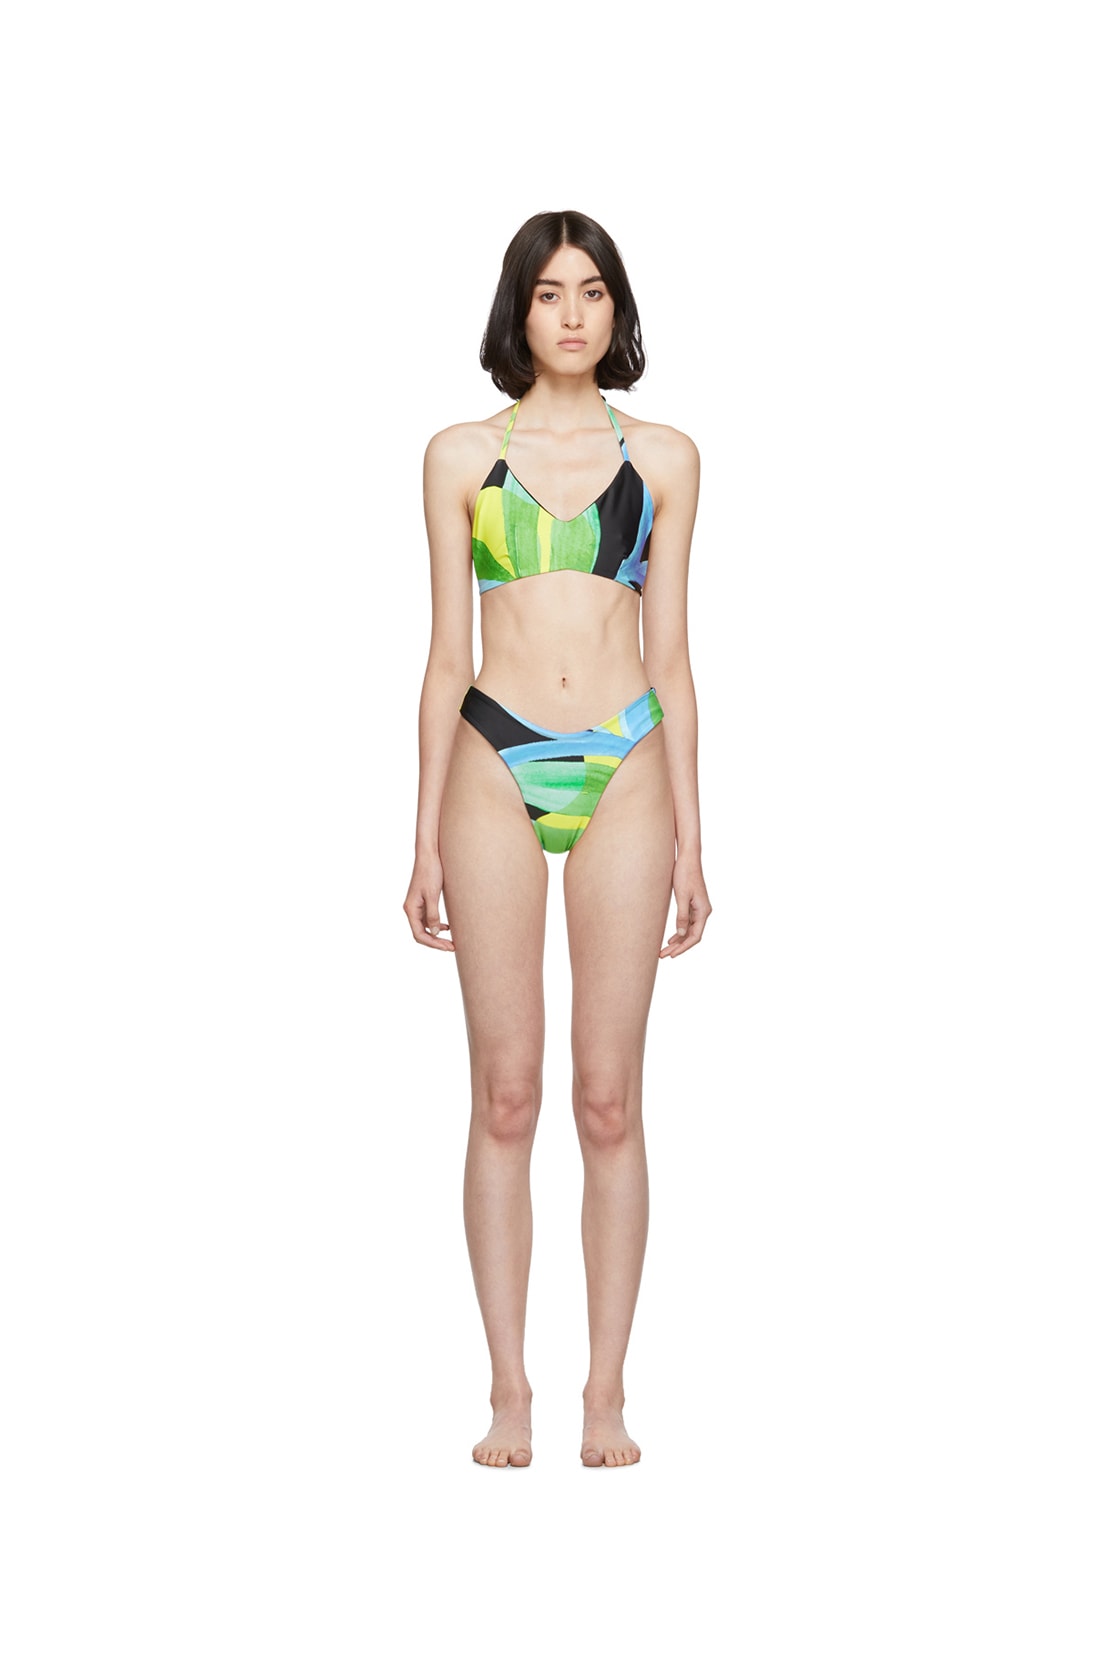 Bikini designer launches eye-popping new swim campaign - but can